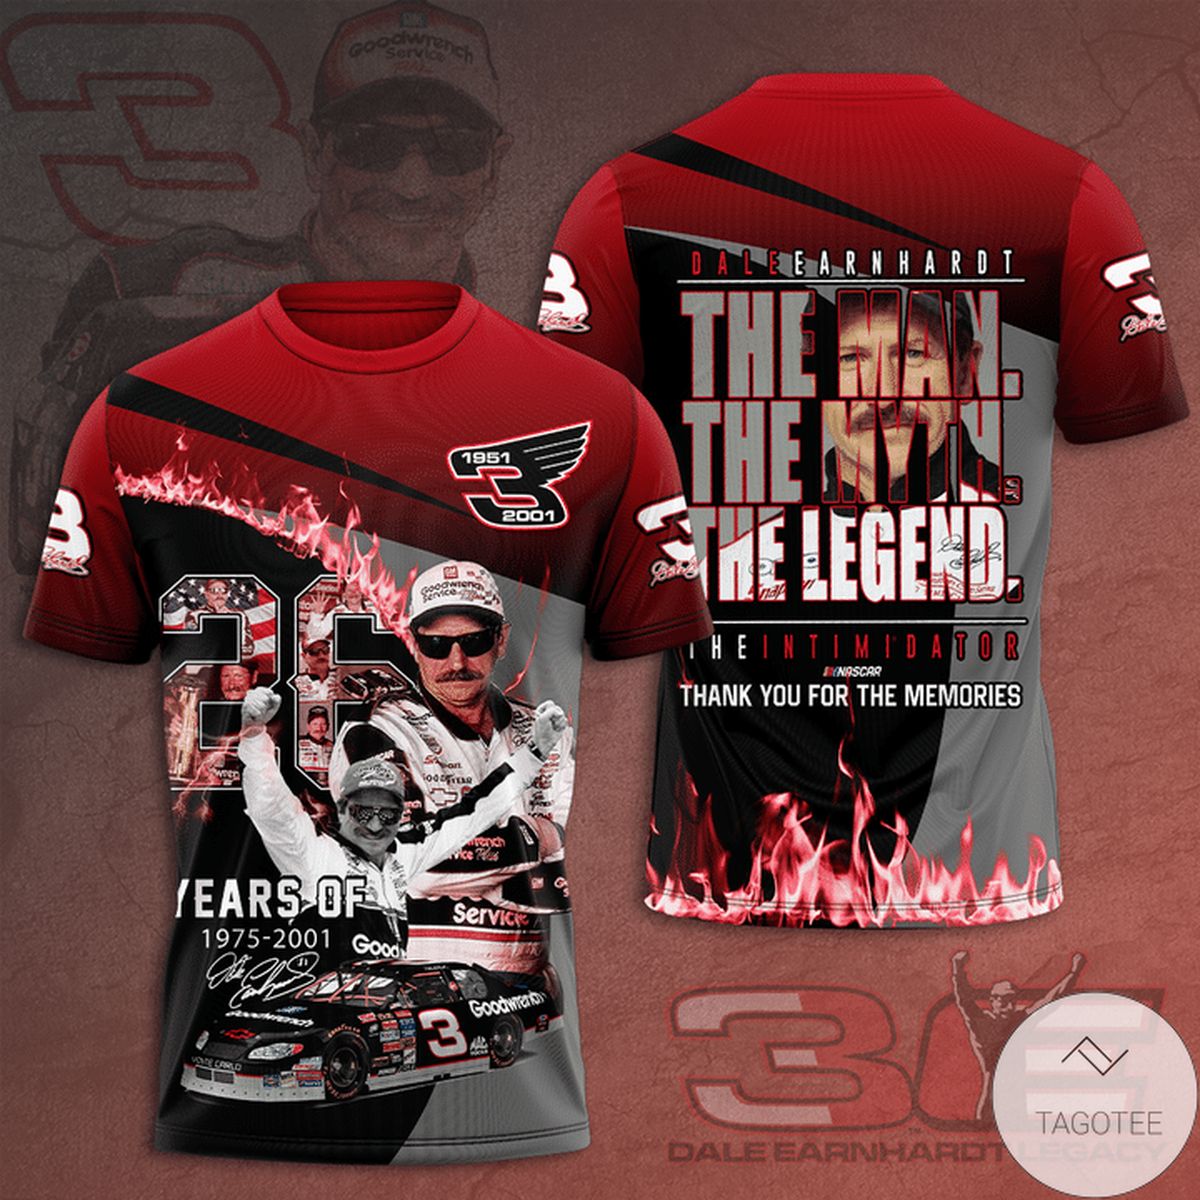 Dale Earnhardt The Man The Myth The Legend 3d Shirt